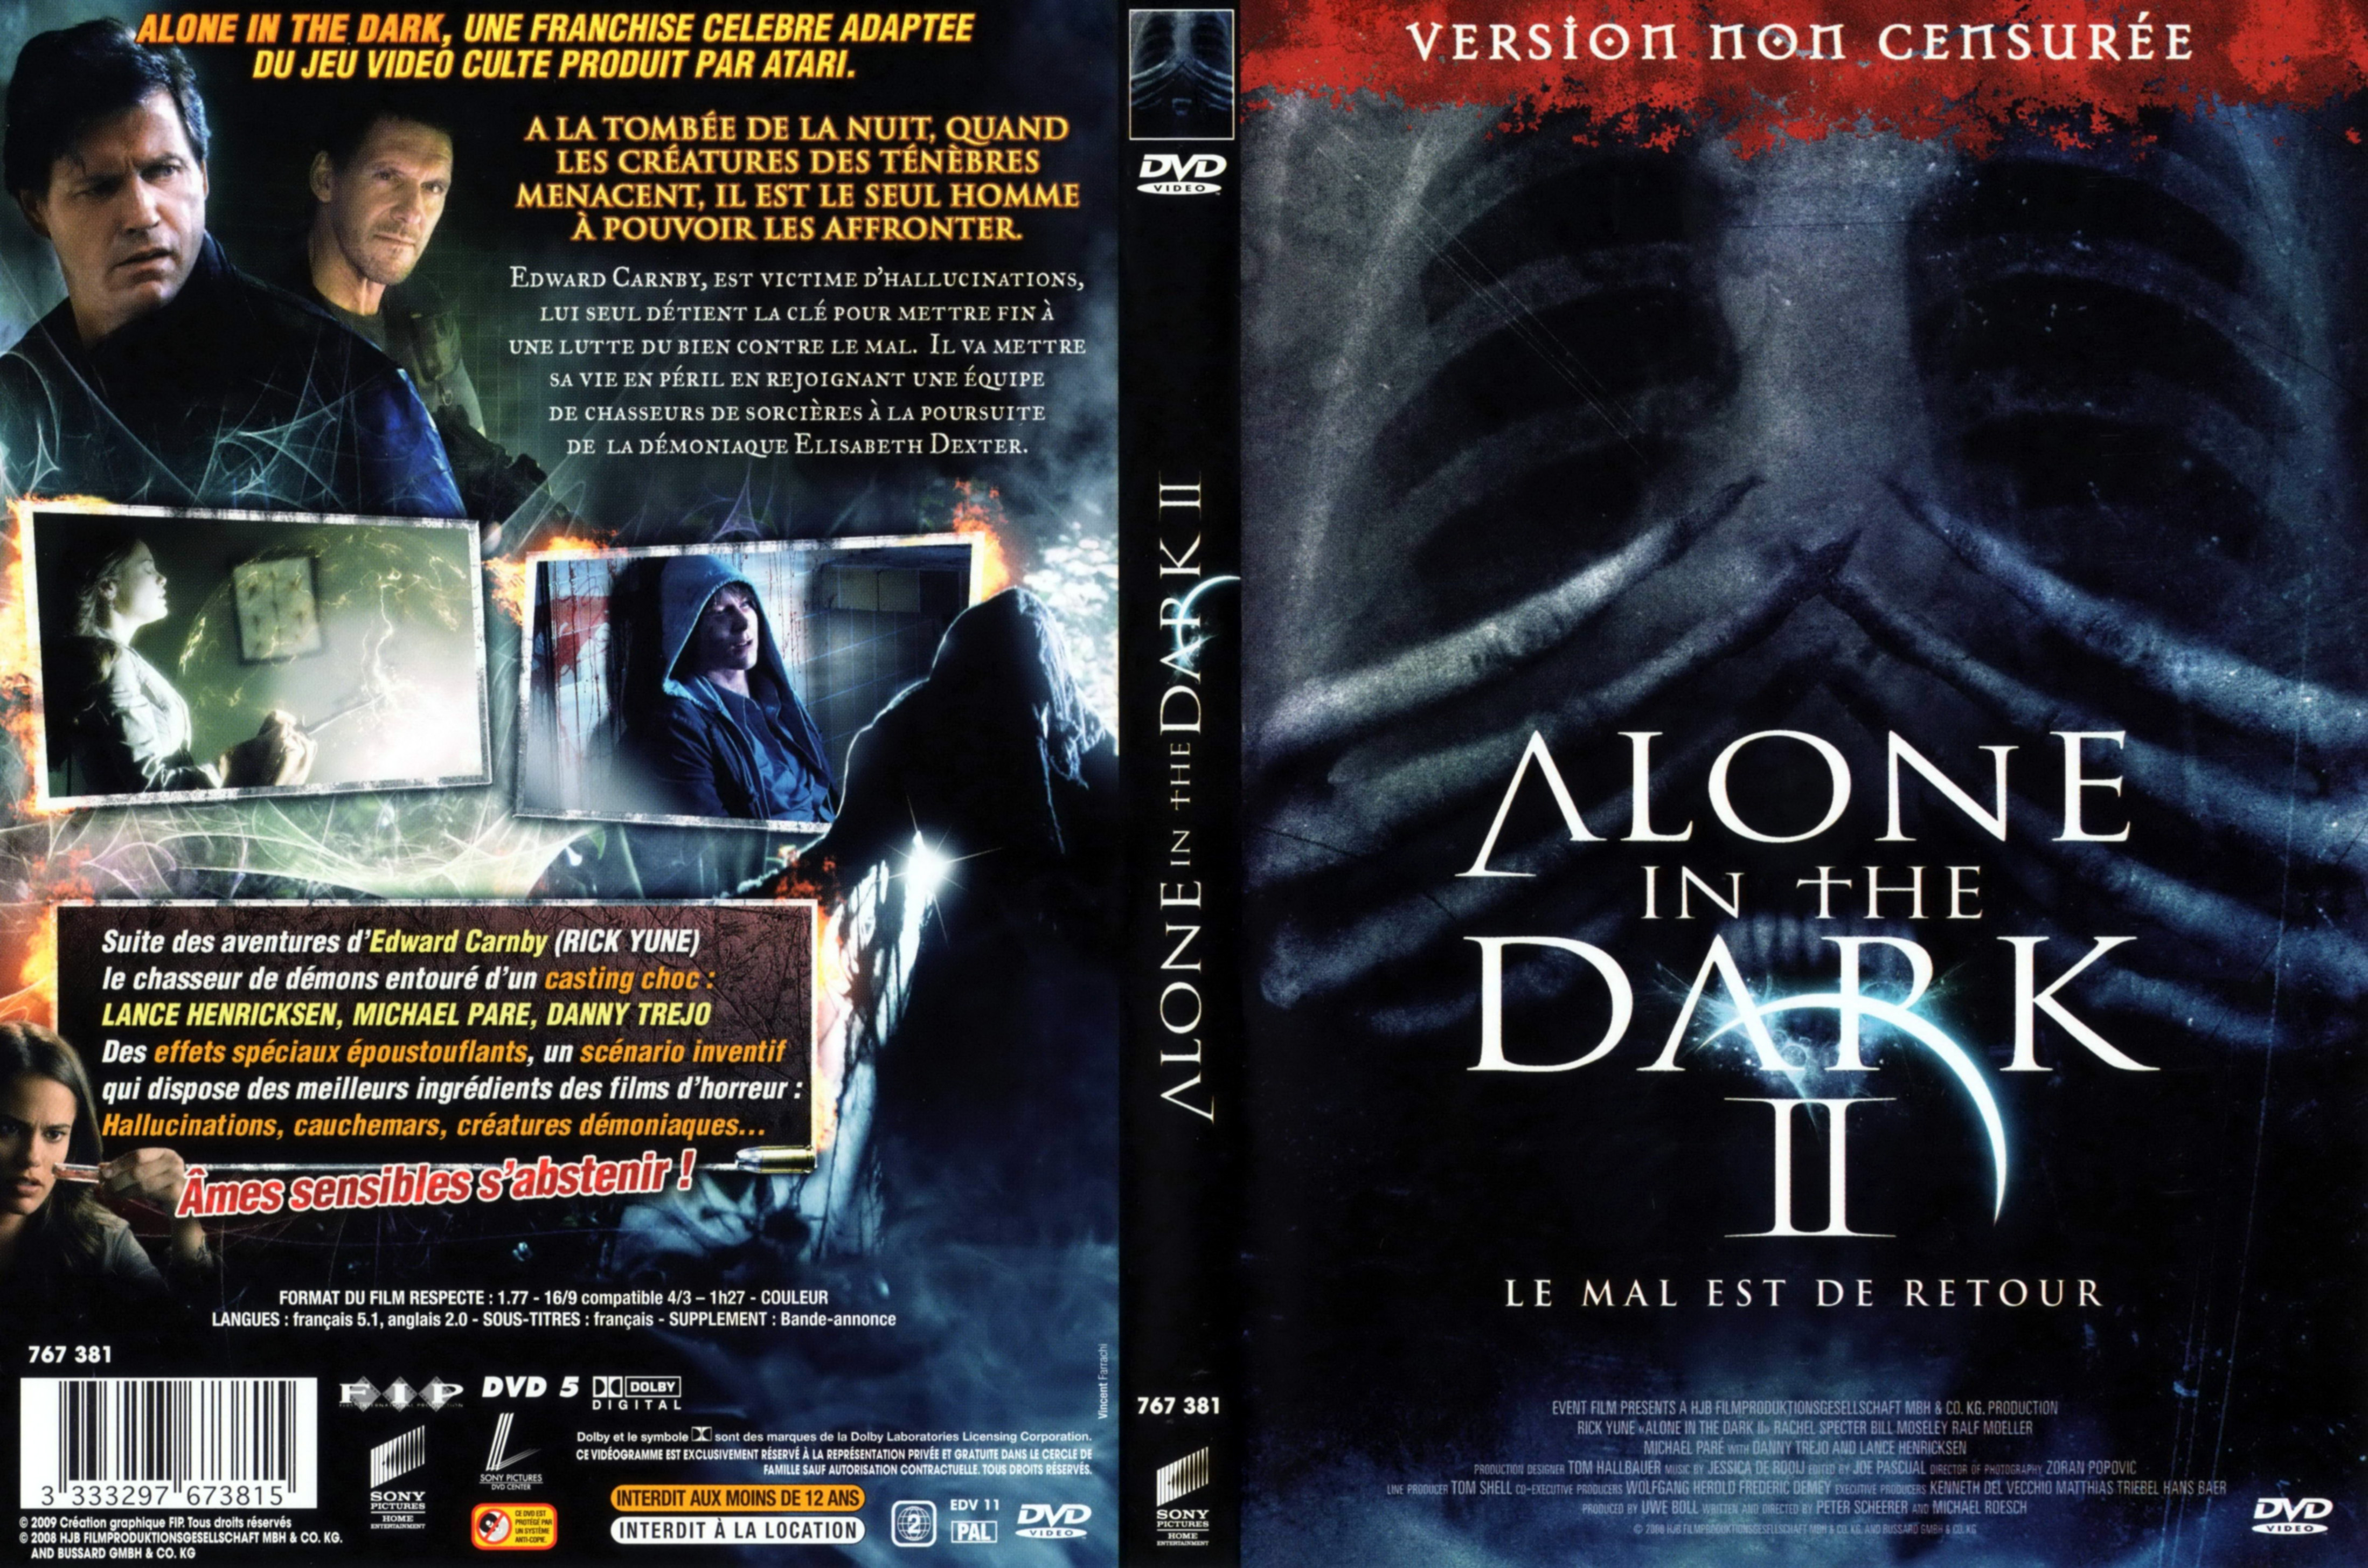 Jaquette DVD Alone in the dark 2